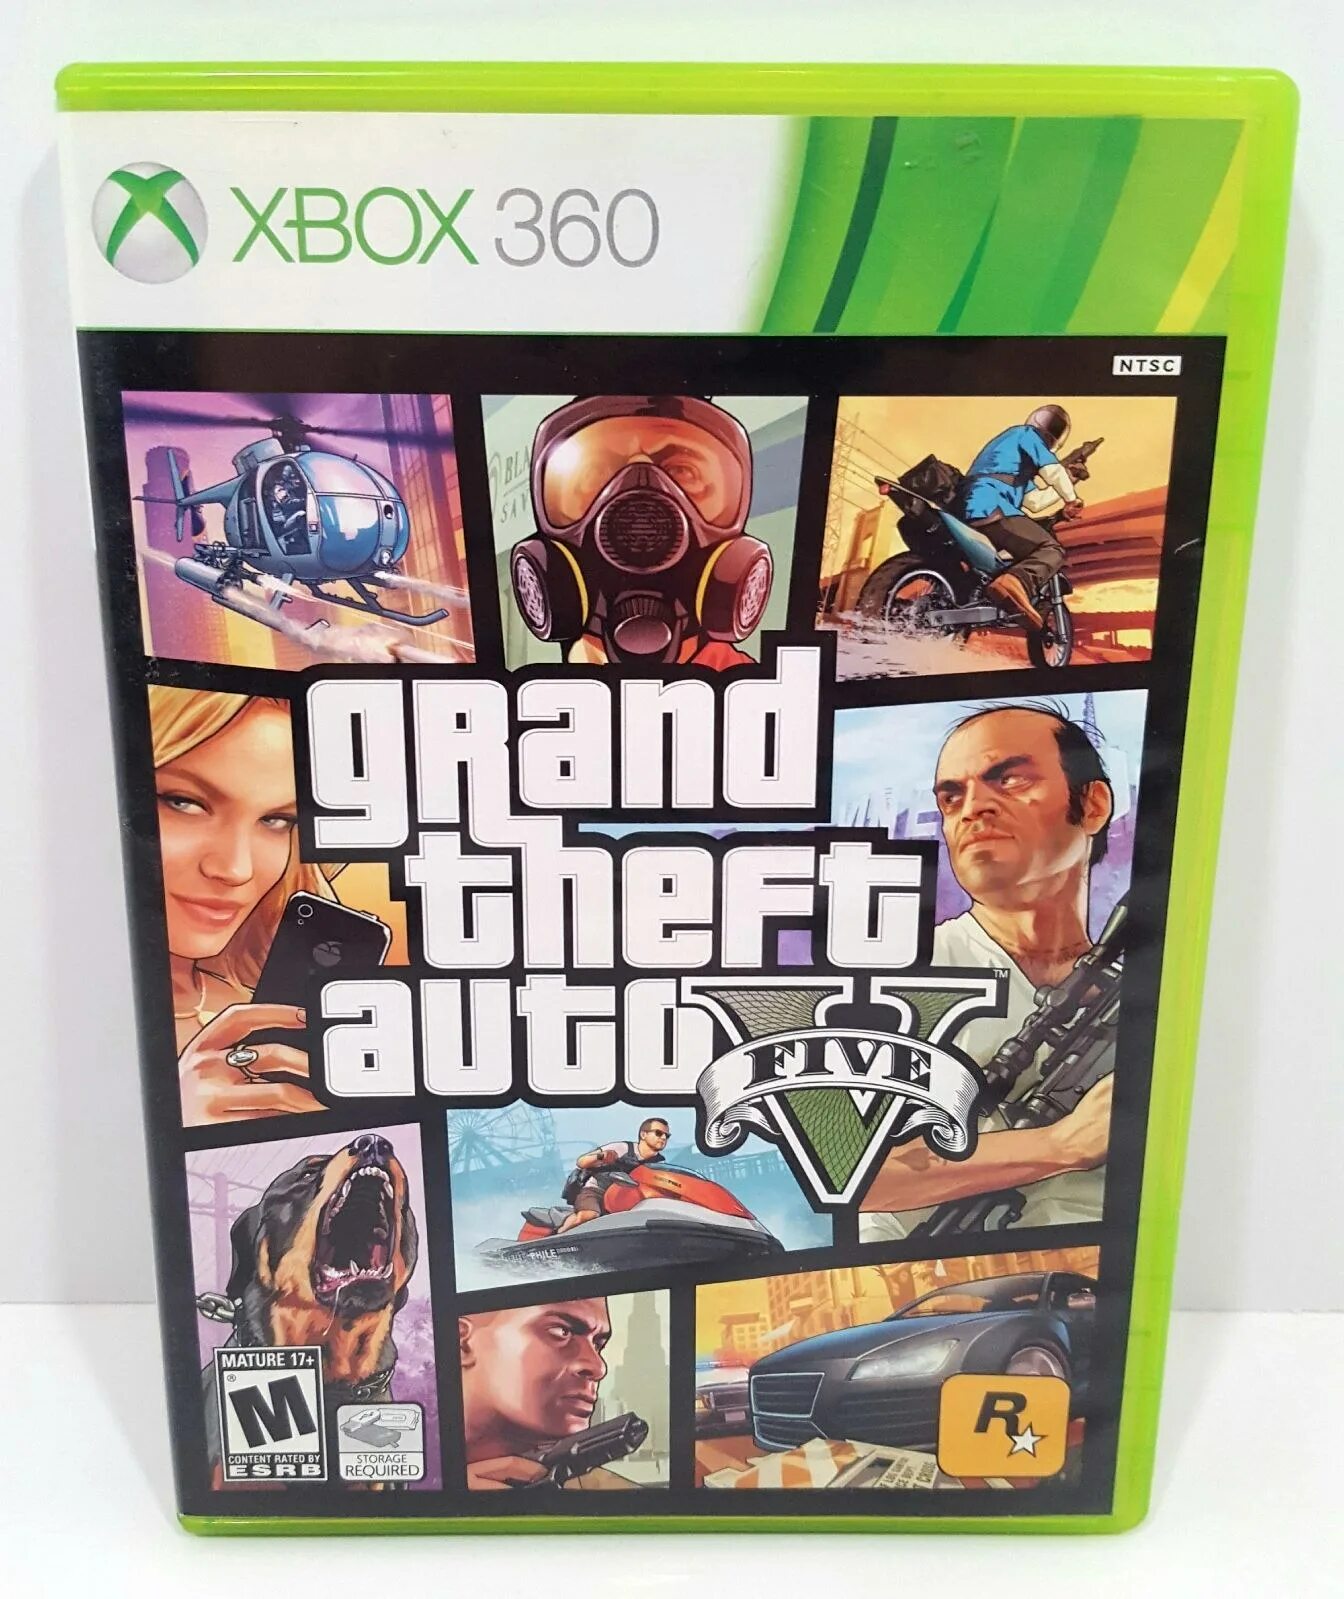 Диск GTA V Xbox 360. GTA 5 Xbox 360 диск. Grand Theft auto v (Xbox 360). GTA 5 на Икс бокс 360. Магазины игр гта 5